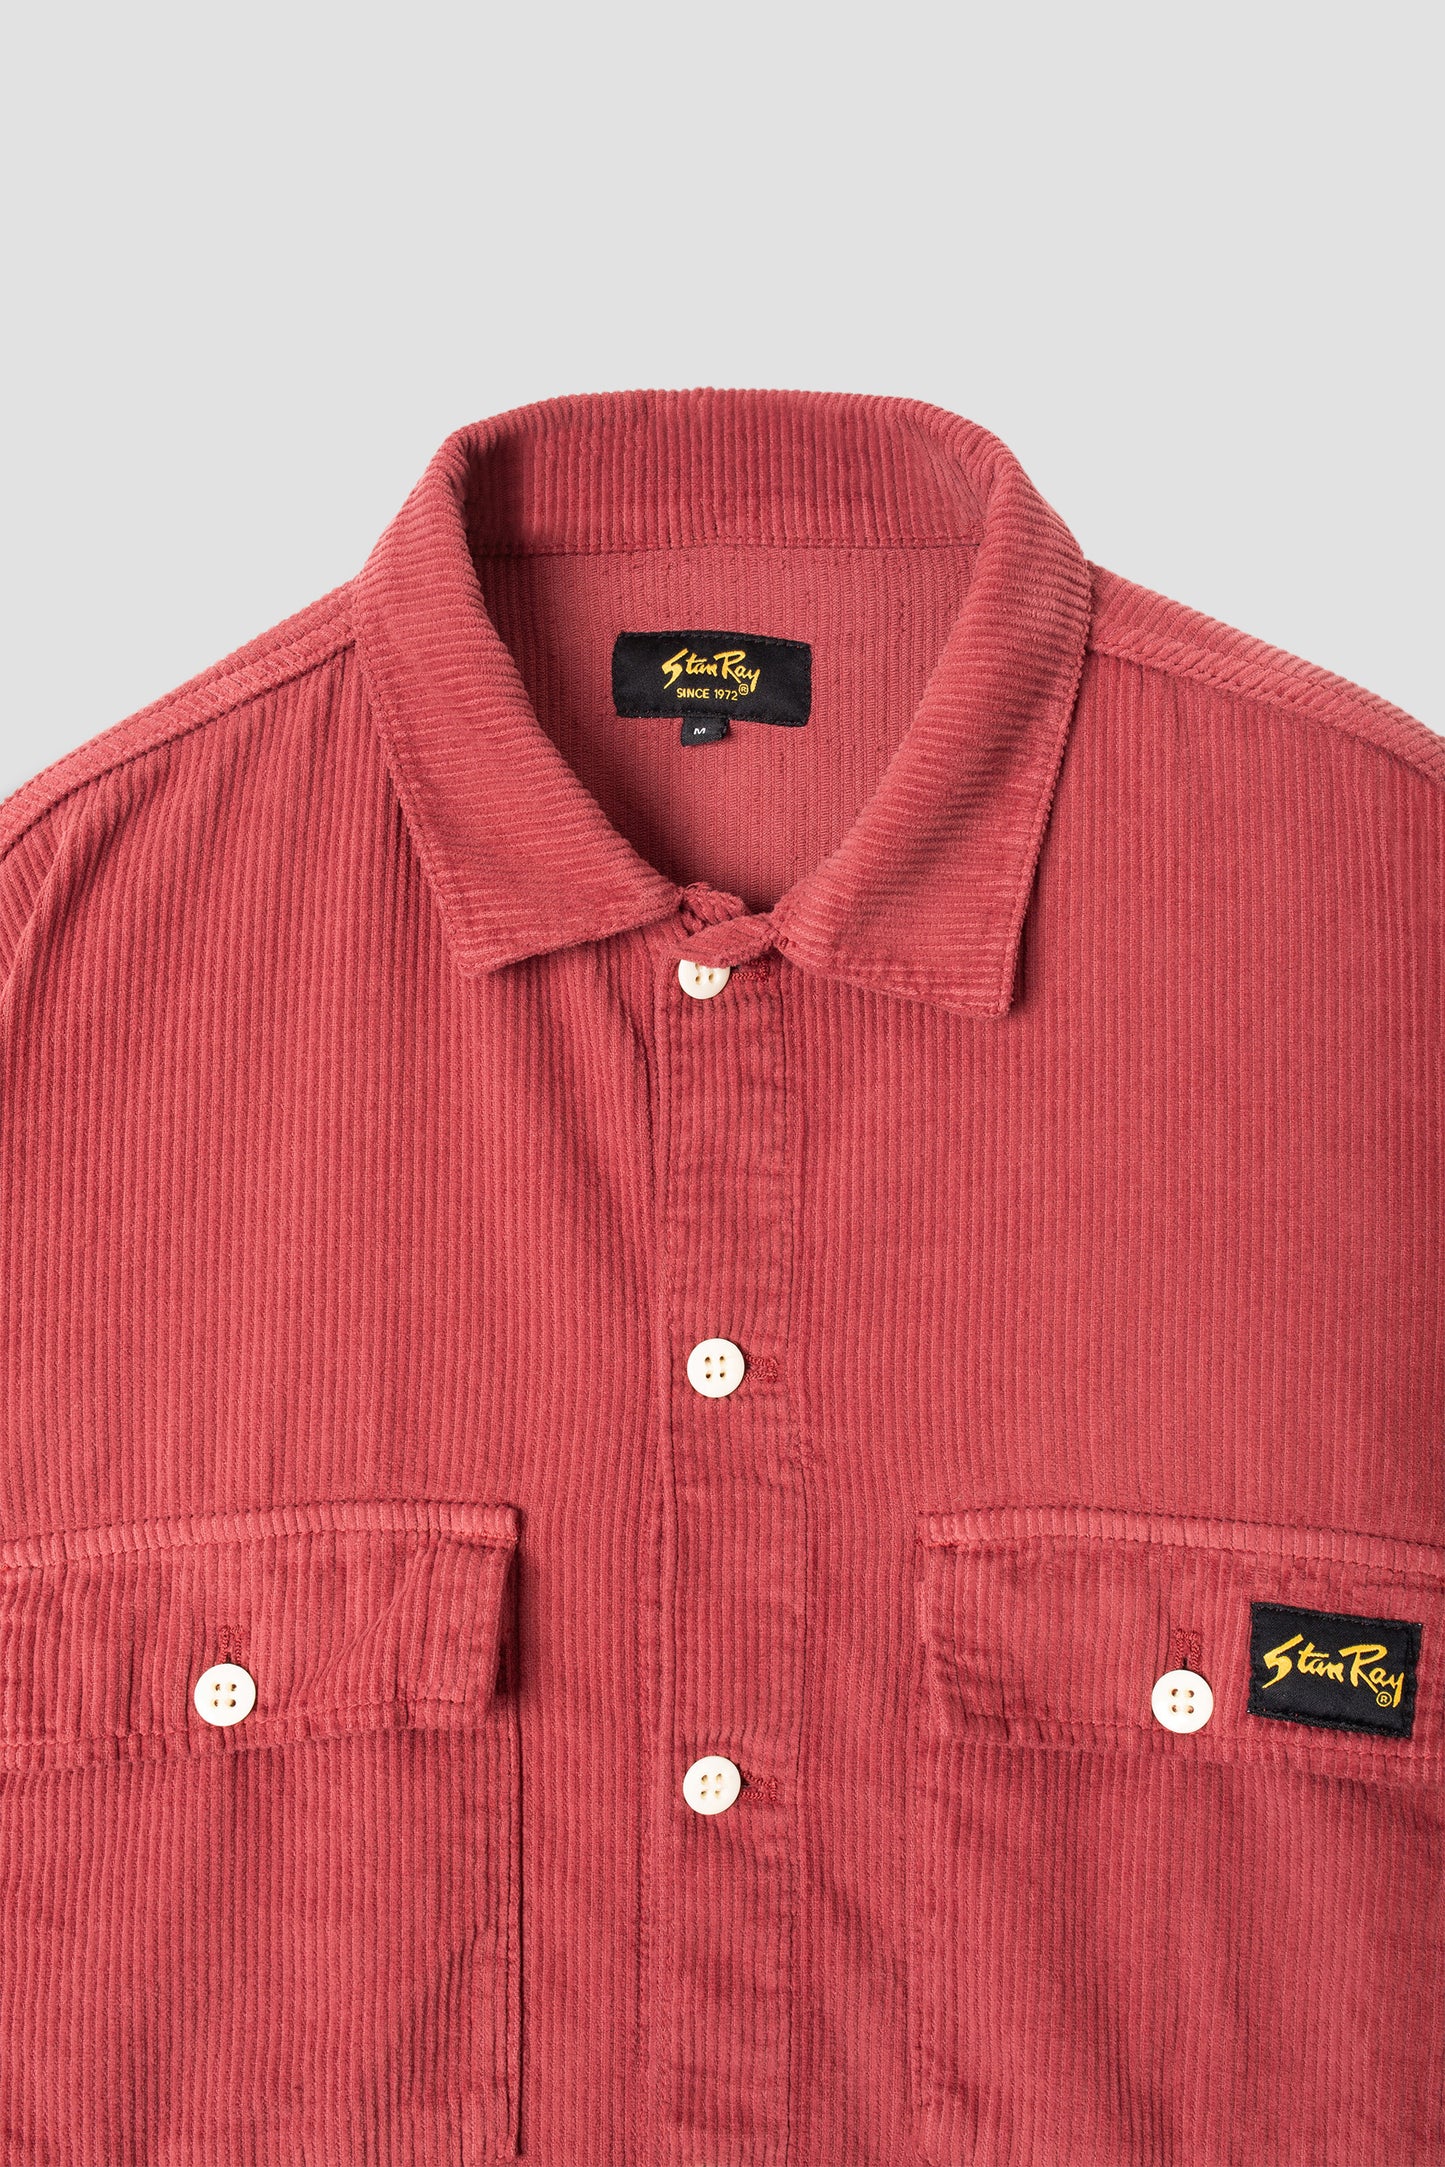 CPO Shirt (Cranberry Cord)